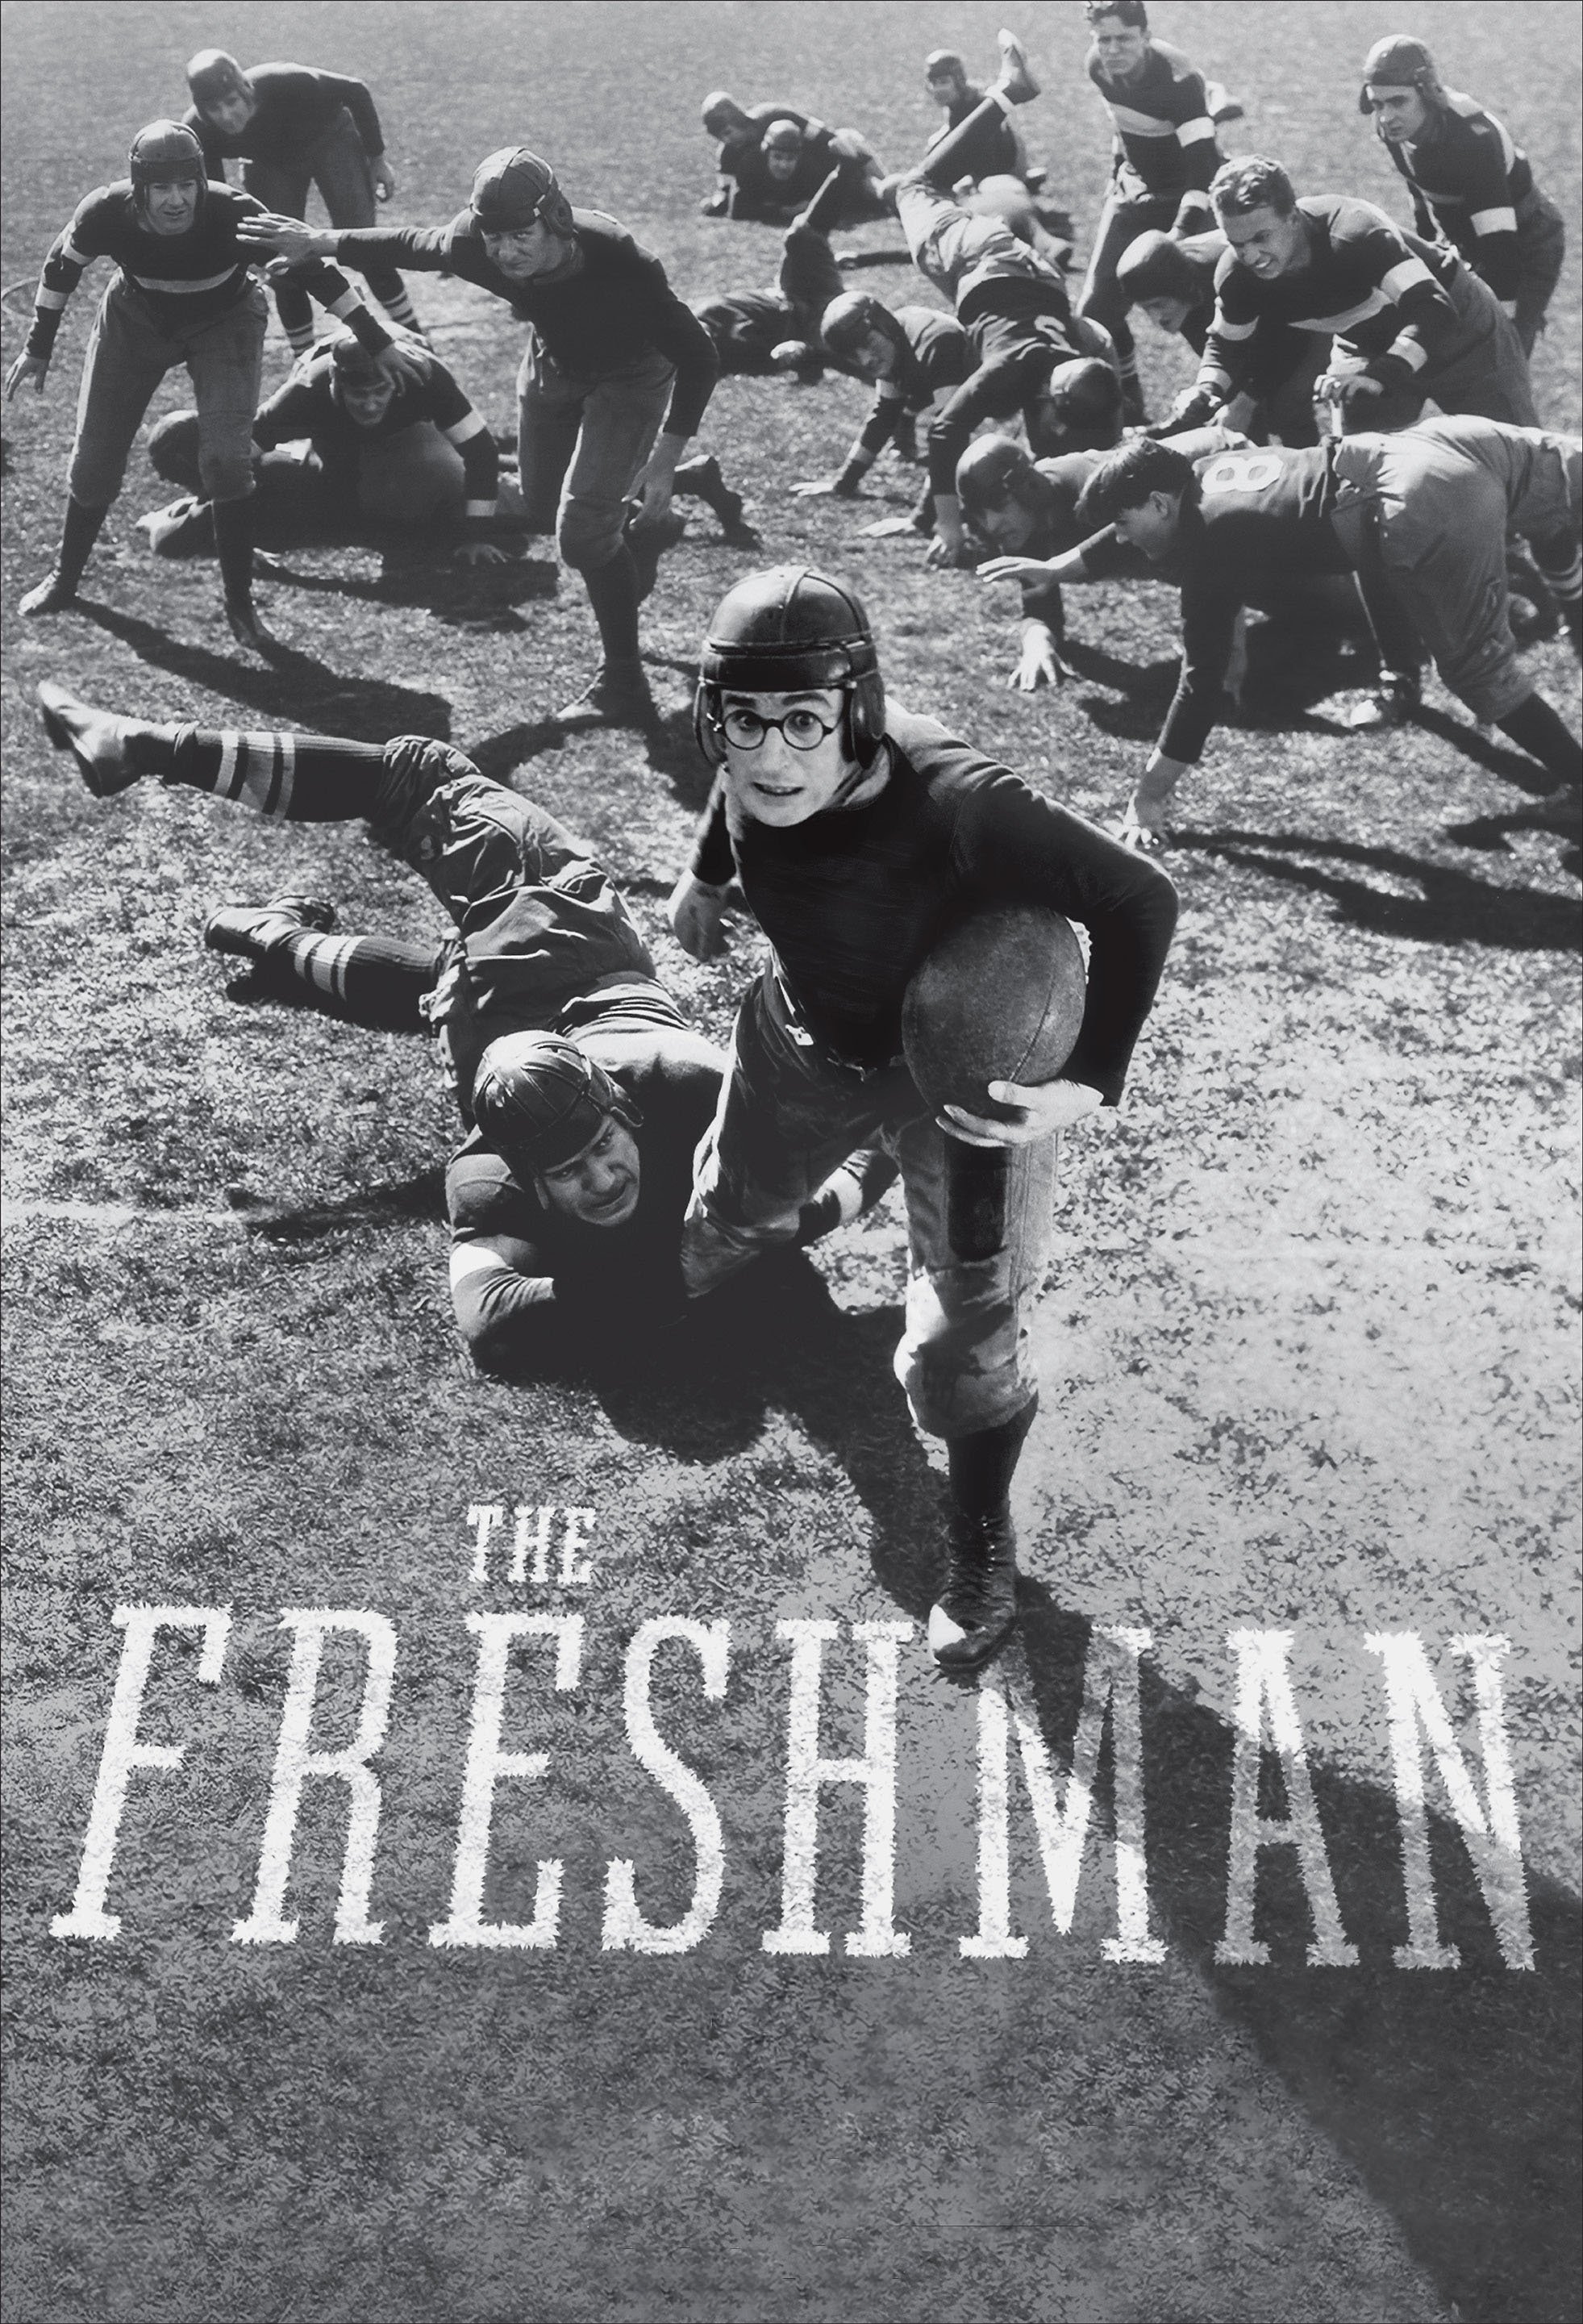 The Freshman Poster